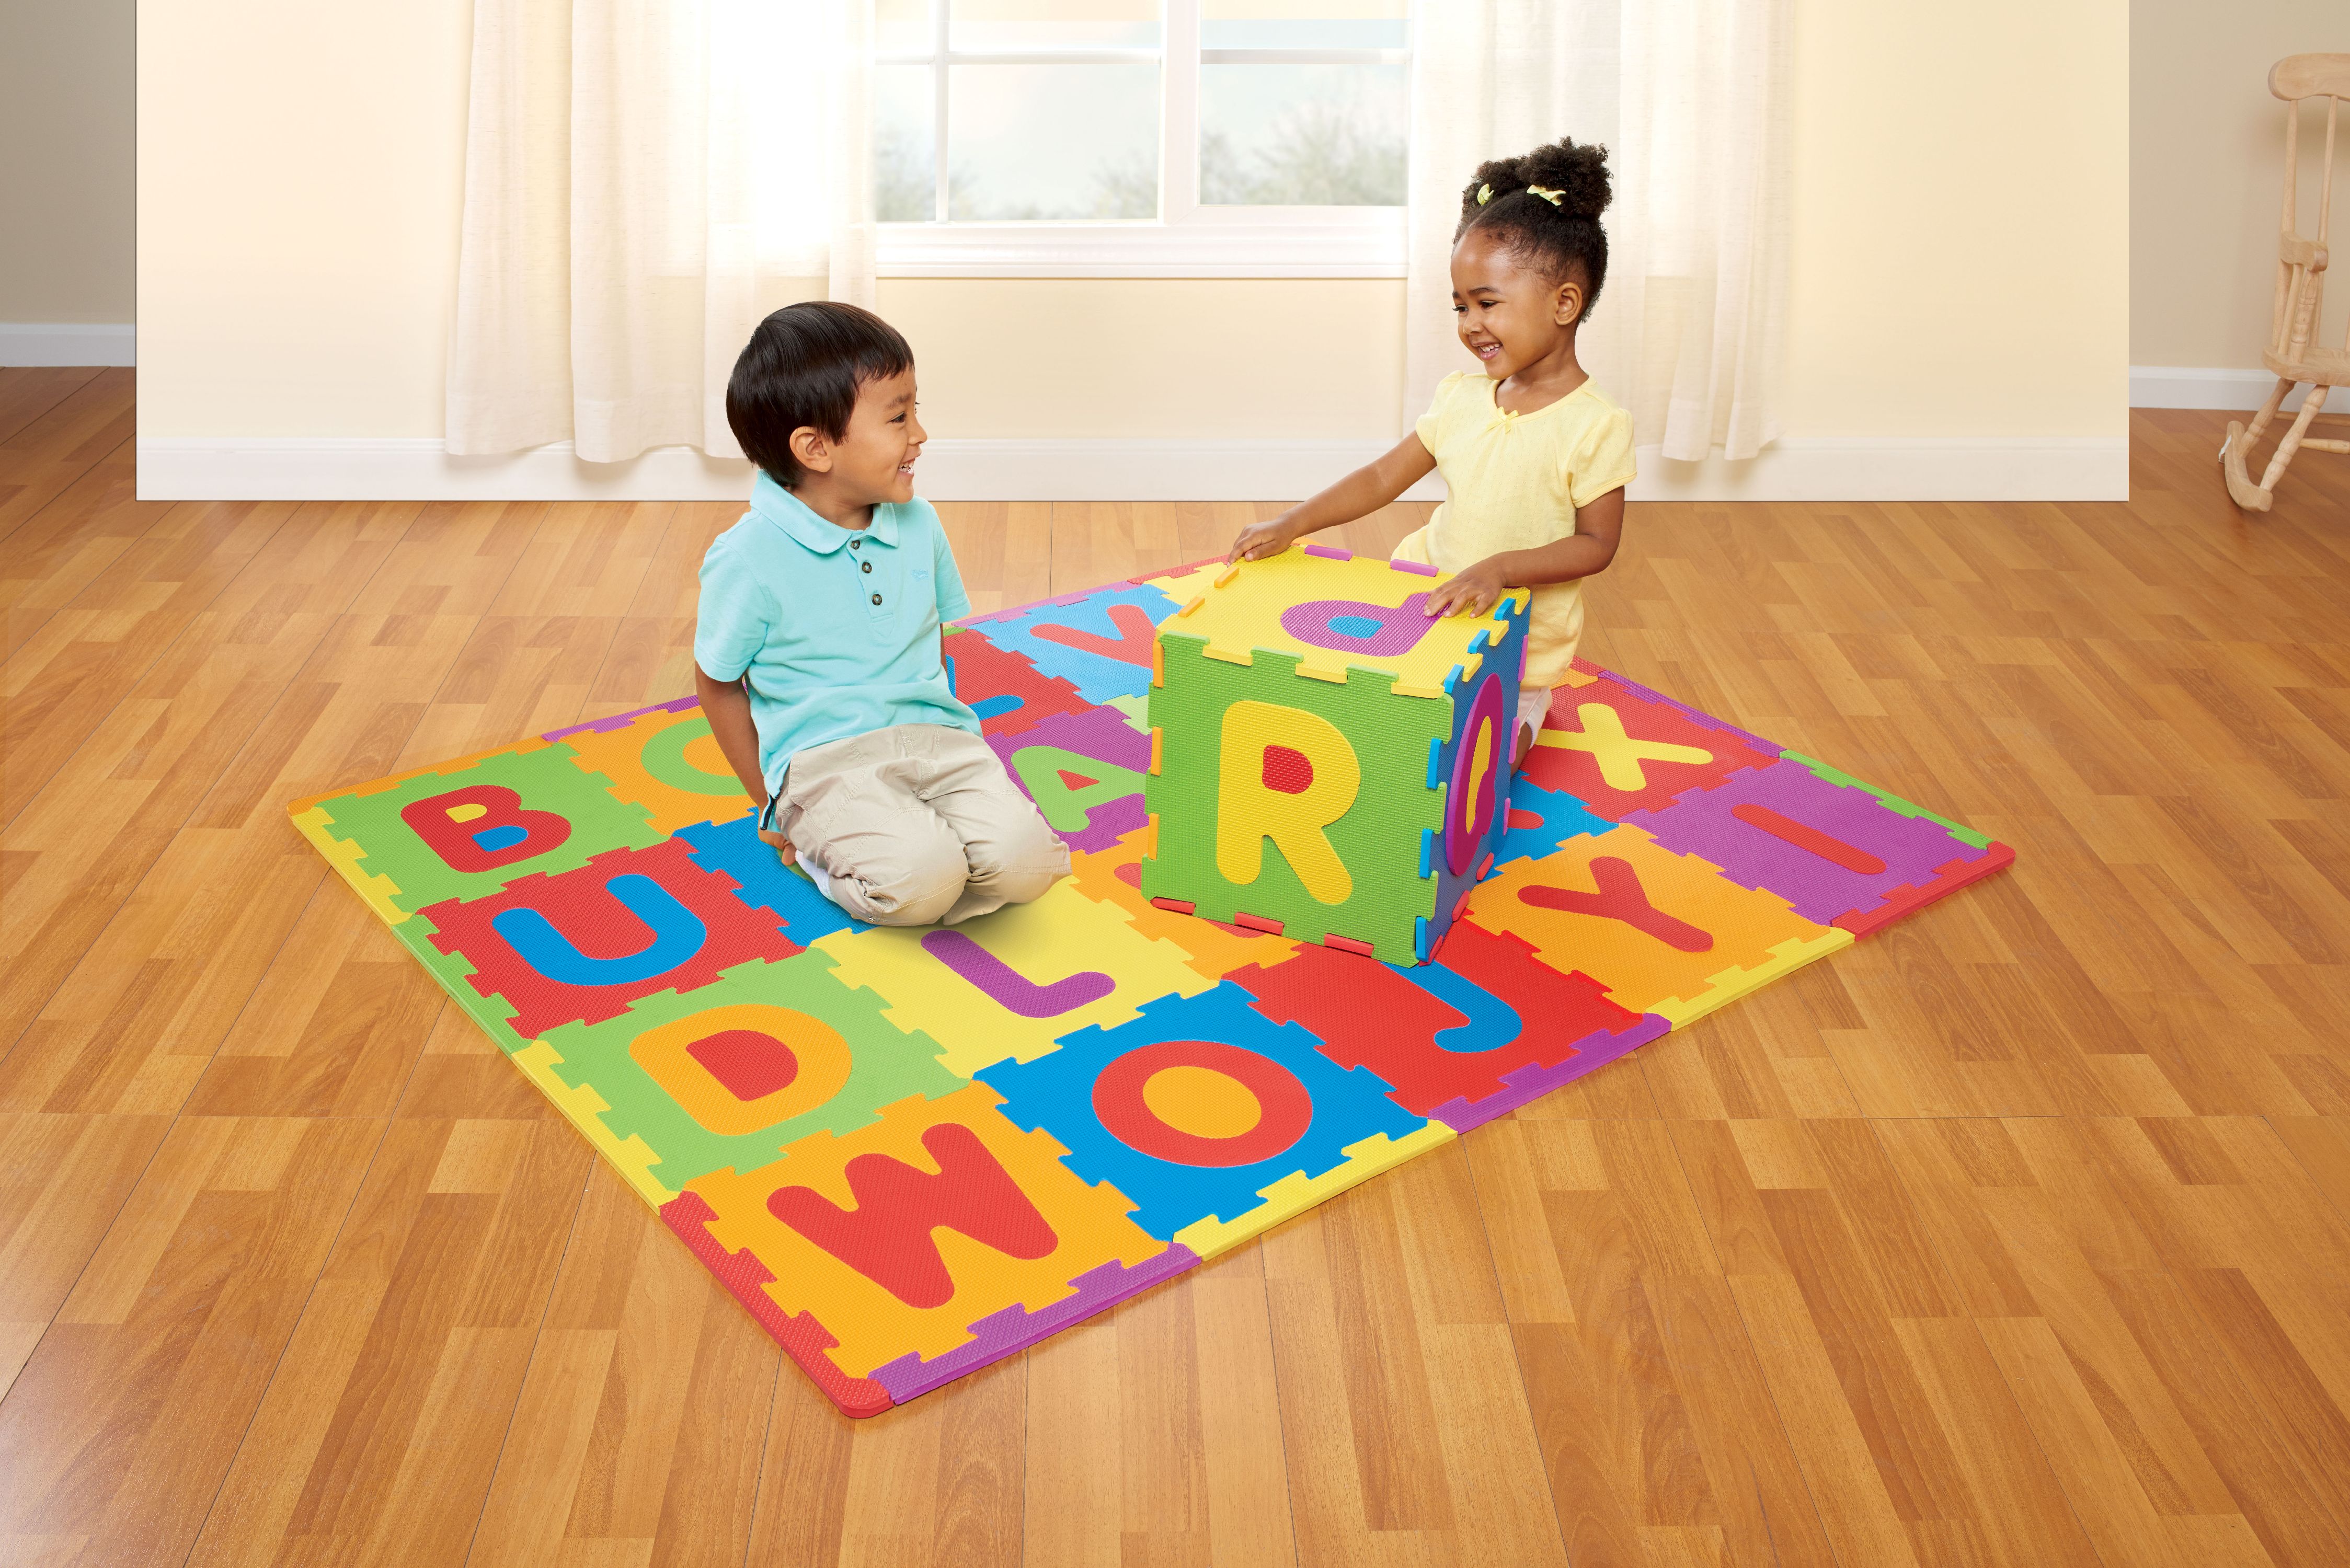 Spark. Create. Imagine. ABC Foam Playmat Learning Toy Set, 28 Pieces, Preschool - image 2 of 7